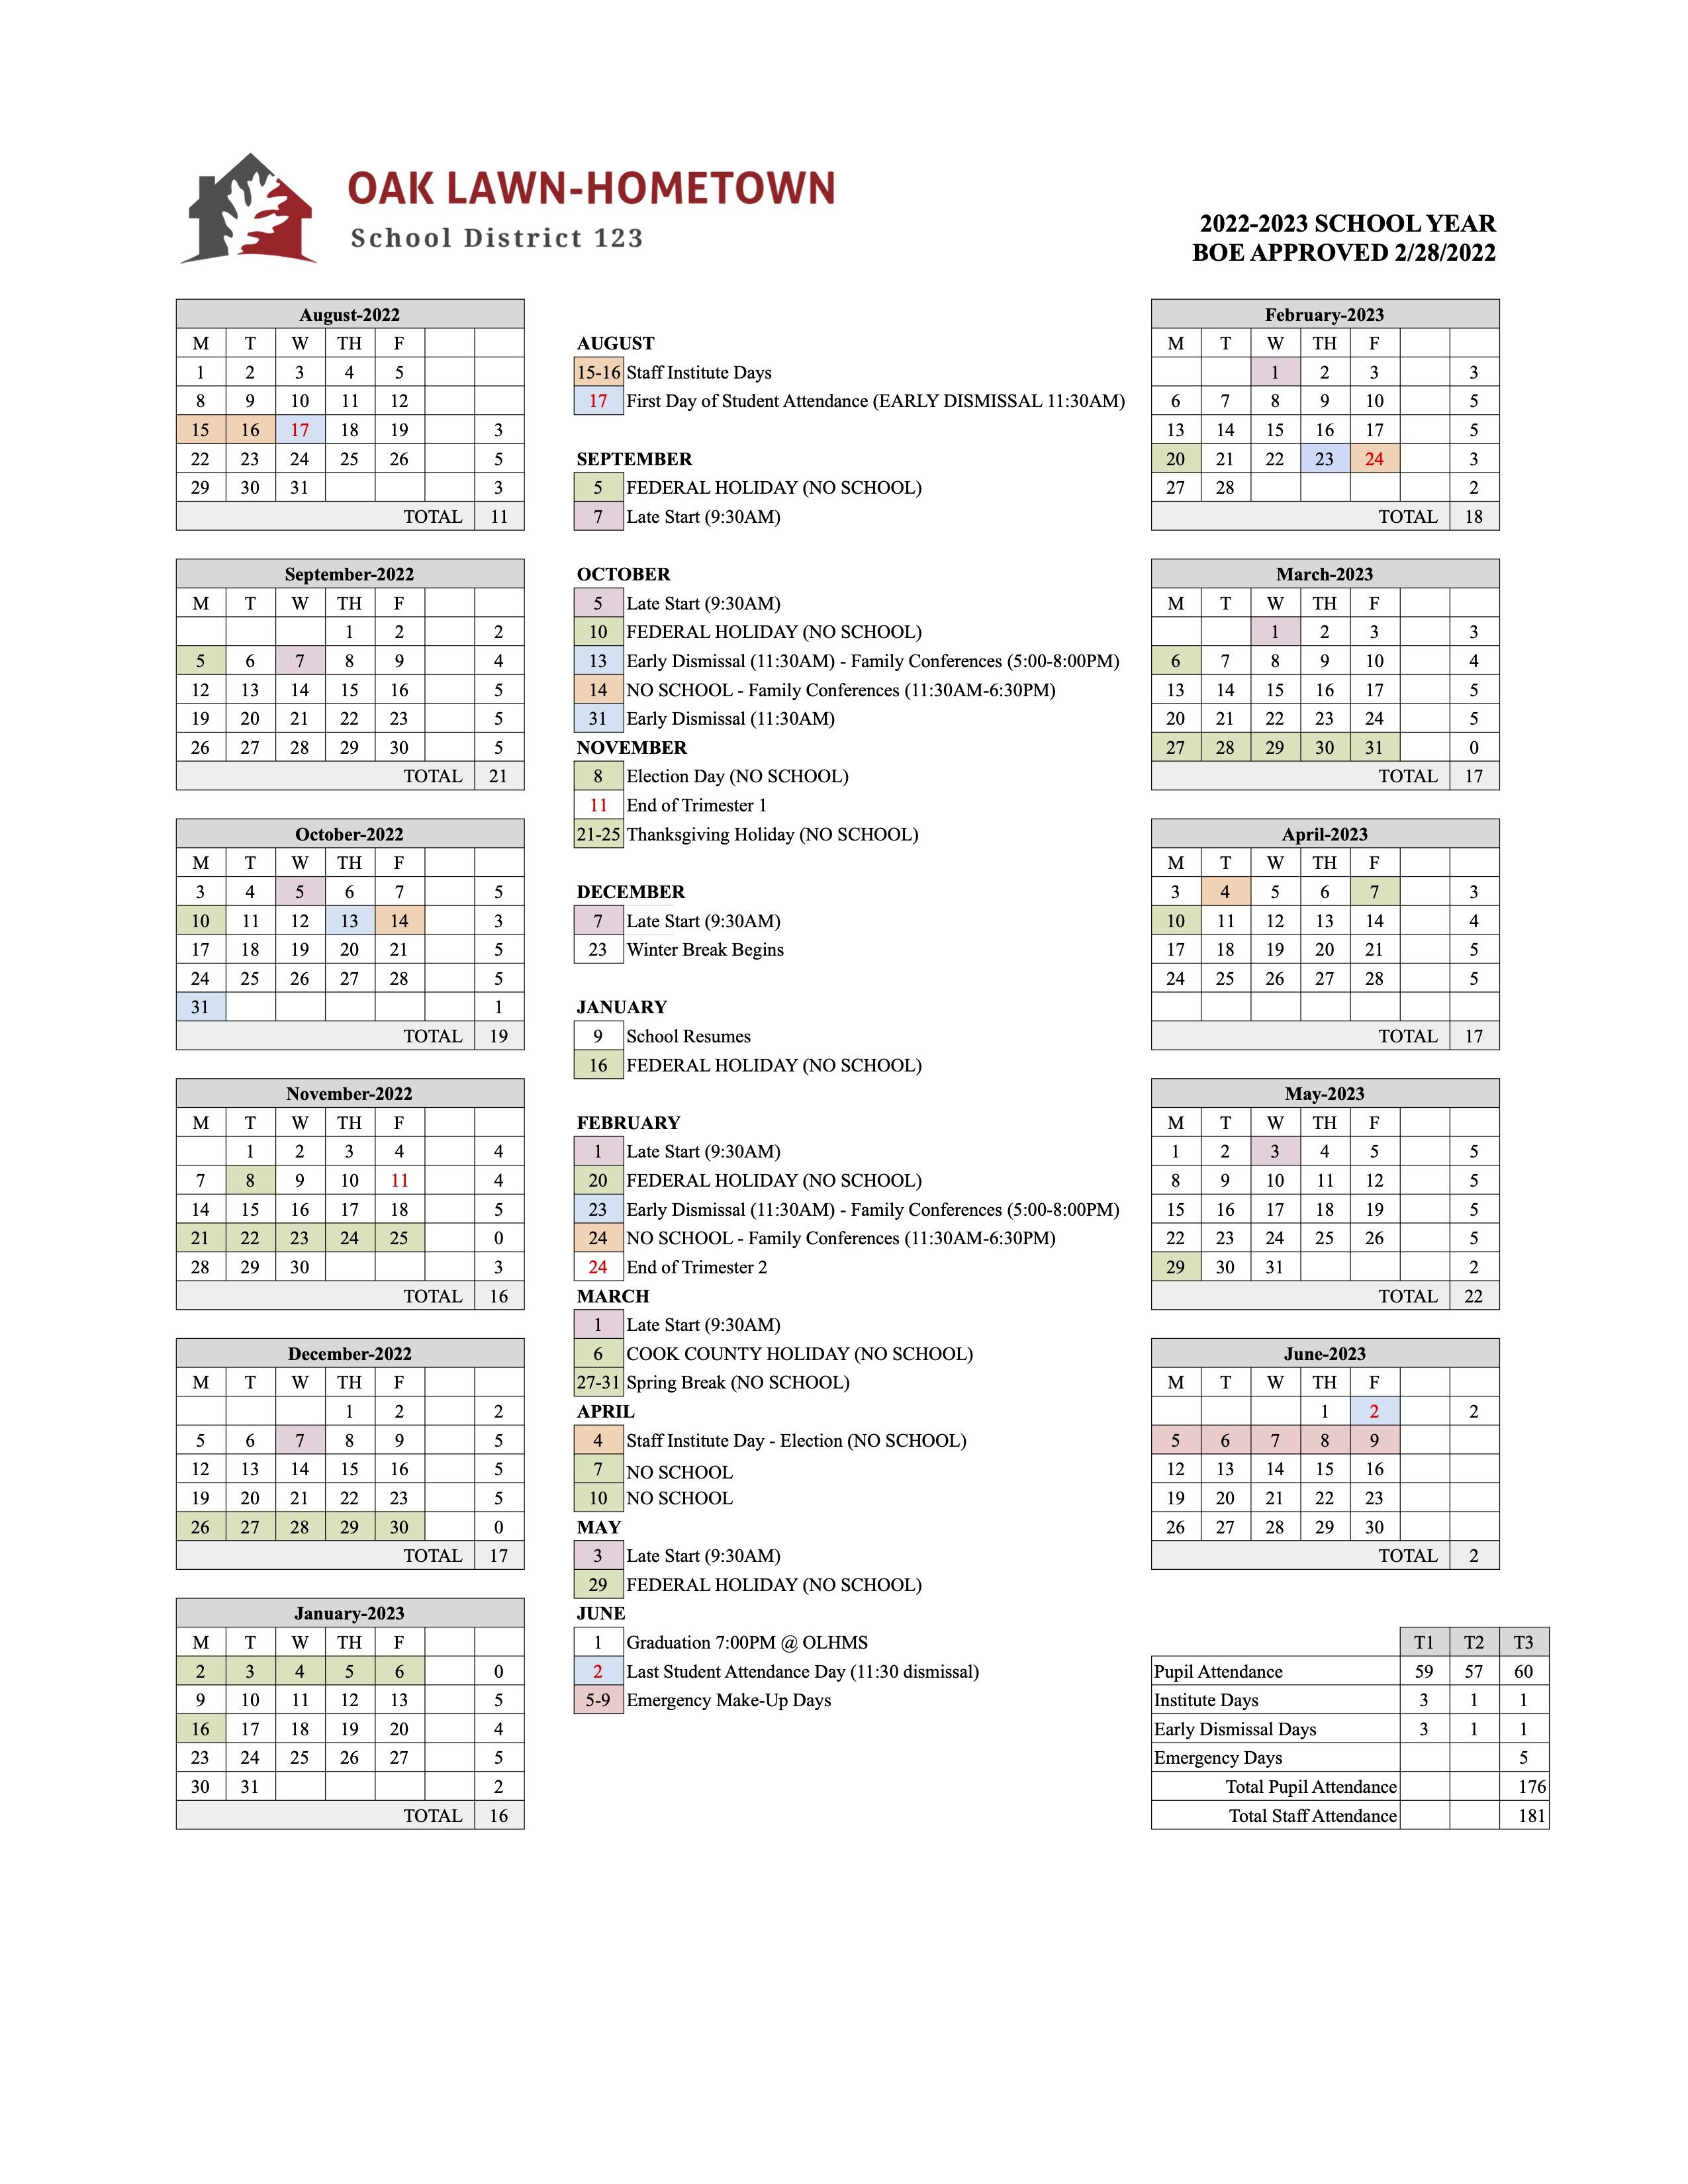 Depaul Calendar 2022 2023 Hza9Hob2C-Jkgm